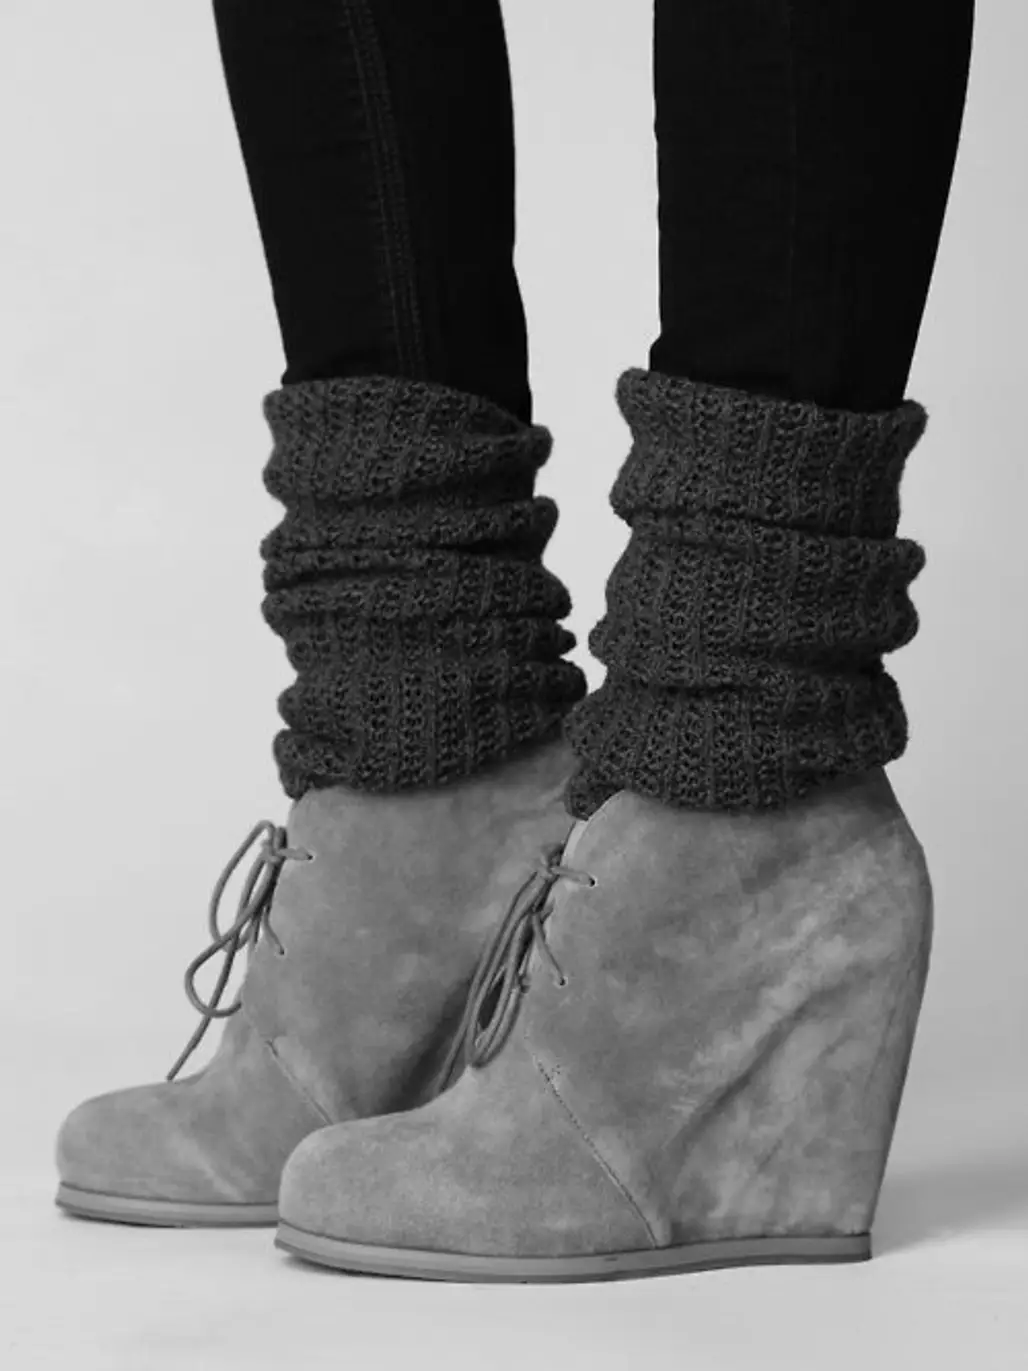 footwear,black,leather,boot,leg,